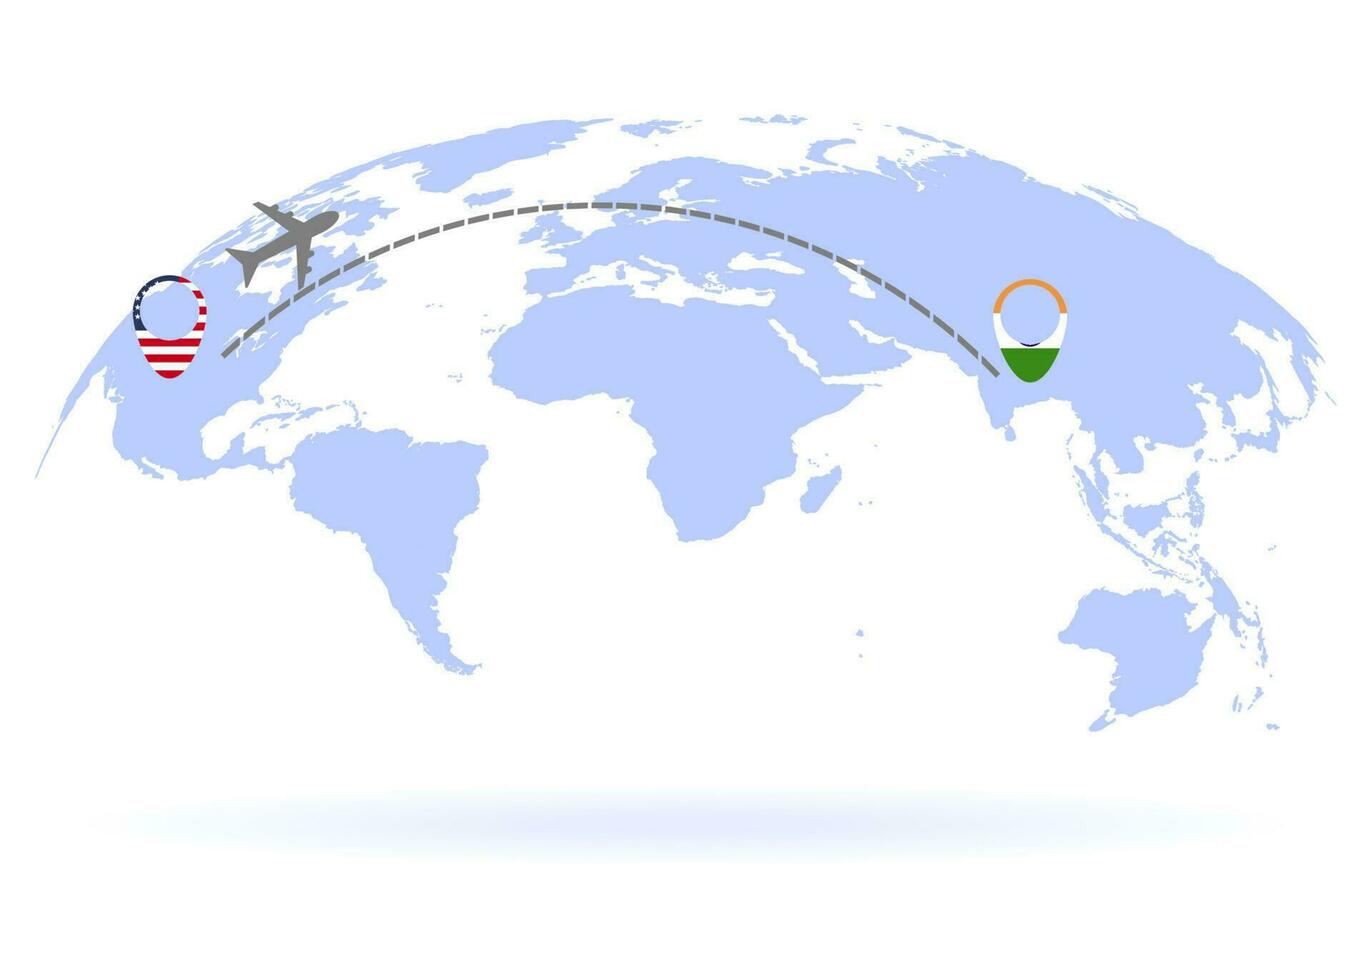 vuelo desde Estados Unidos a India encima mundo mapa. avión llega a India. el mundo mapa. avión línea camino. vector ilustración. eps 10